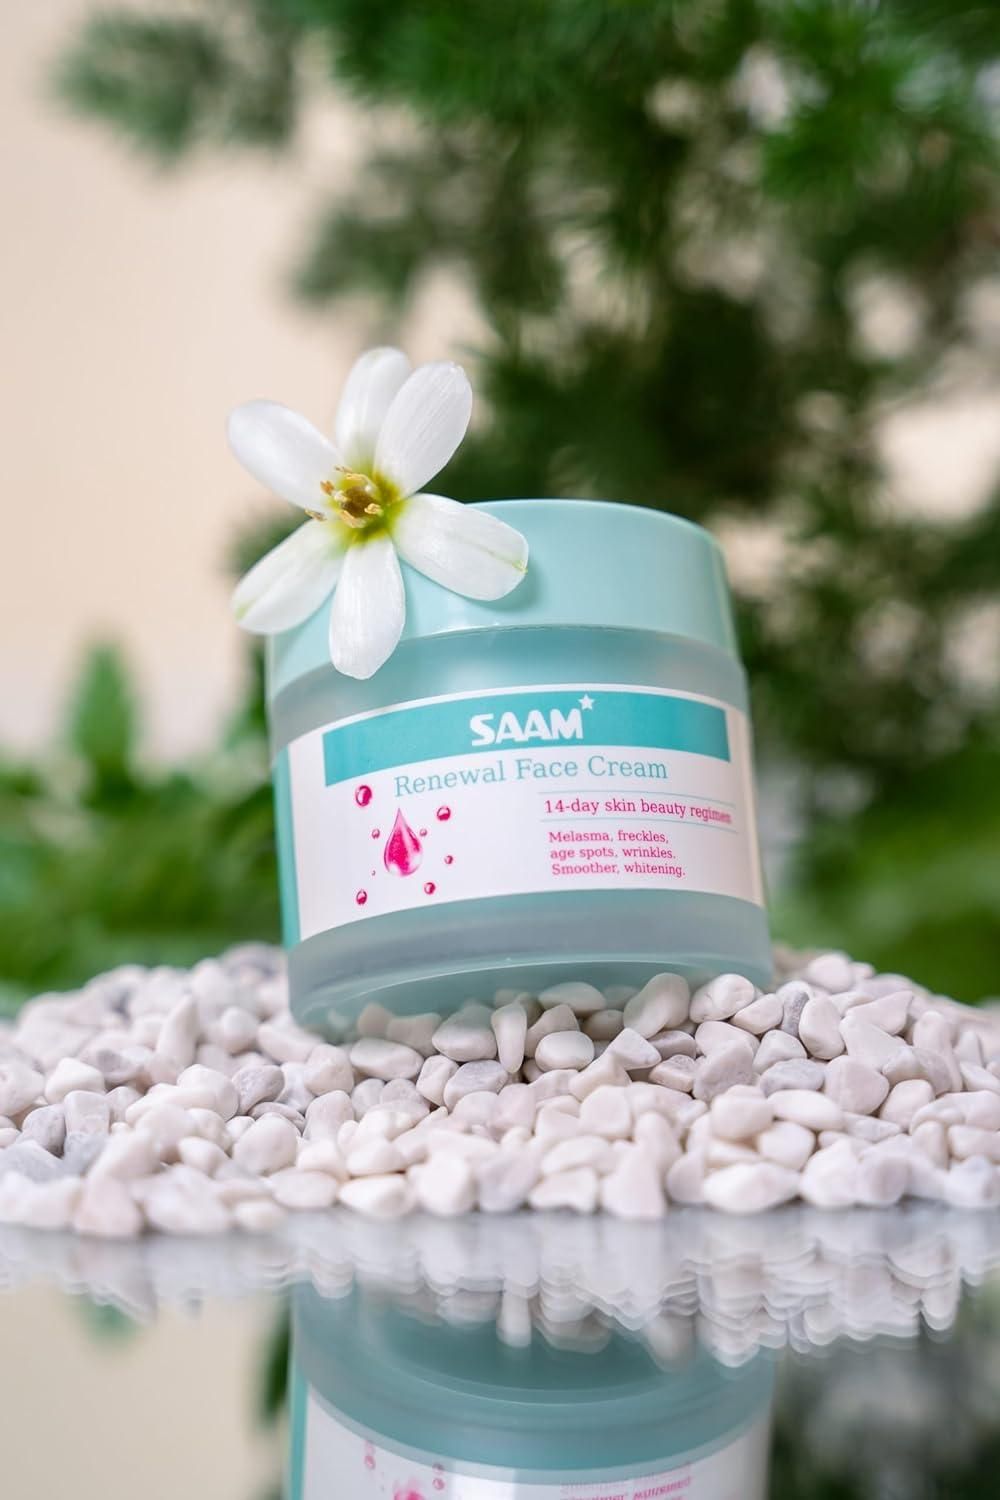 Saam Renewal Face Cream (Buy 1 Get 1 Free)